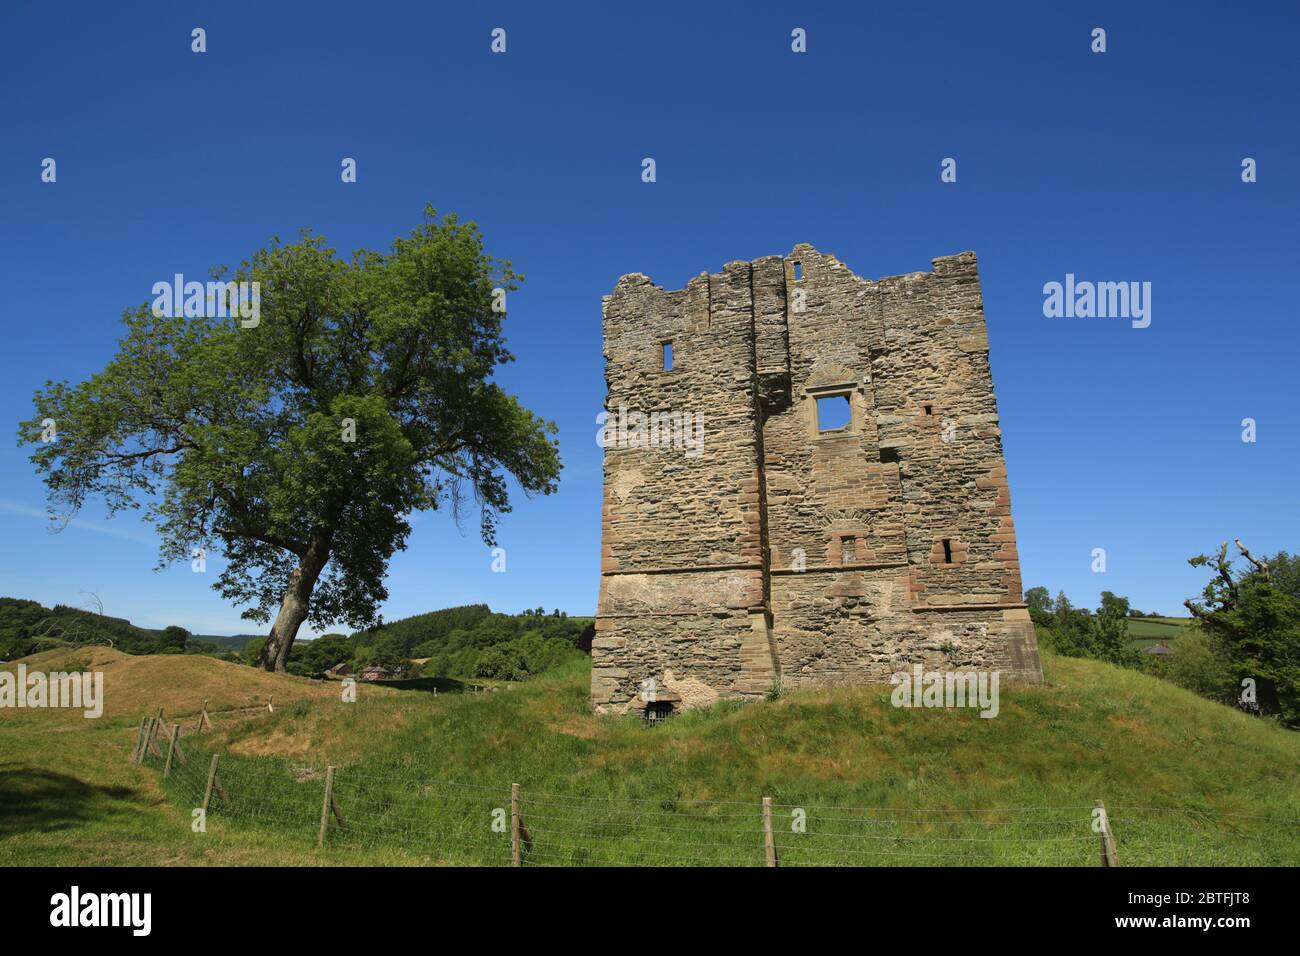 Hopton castle, Craven arms, Shropshire, England, UK. Stock Photo